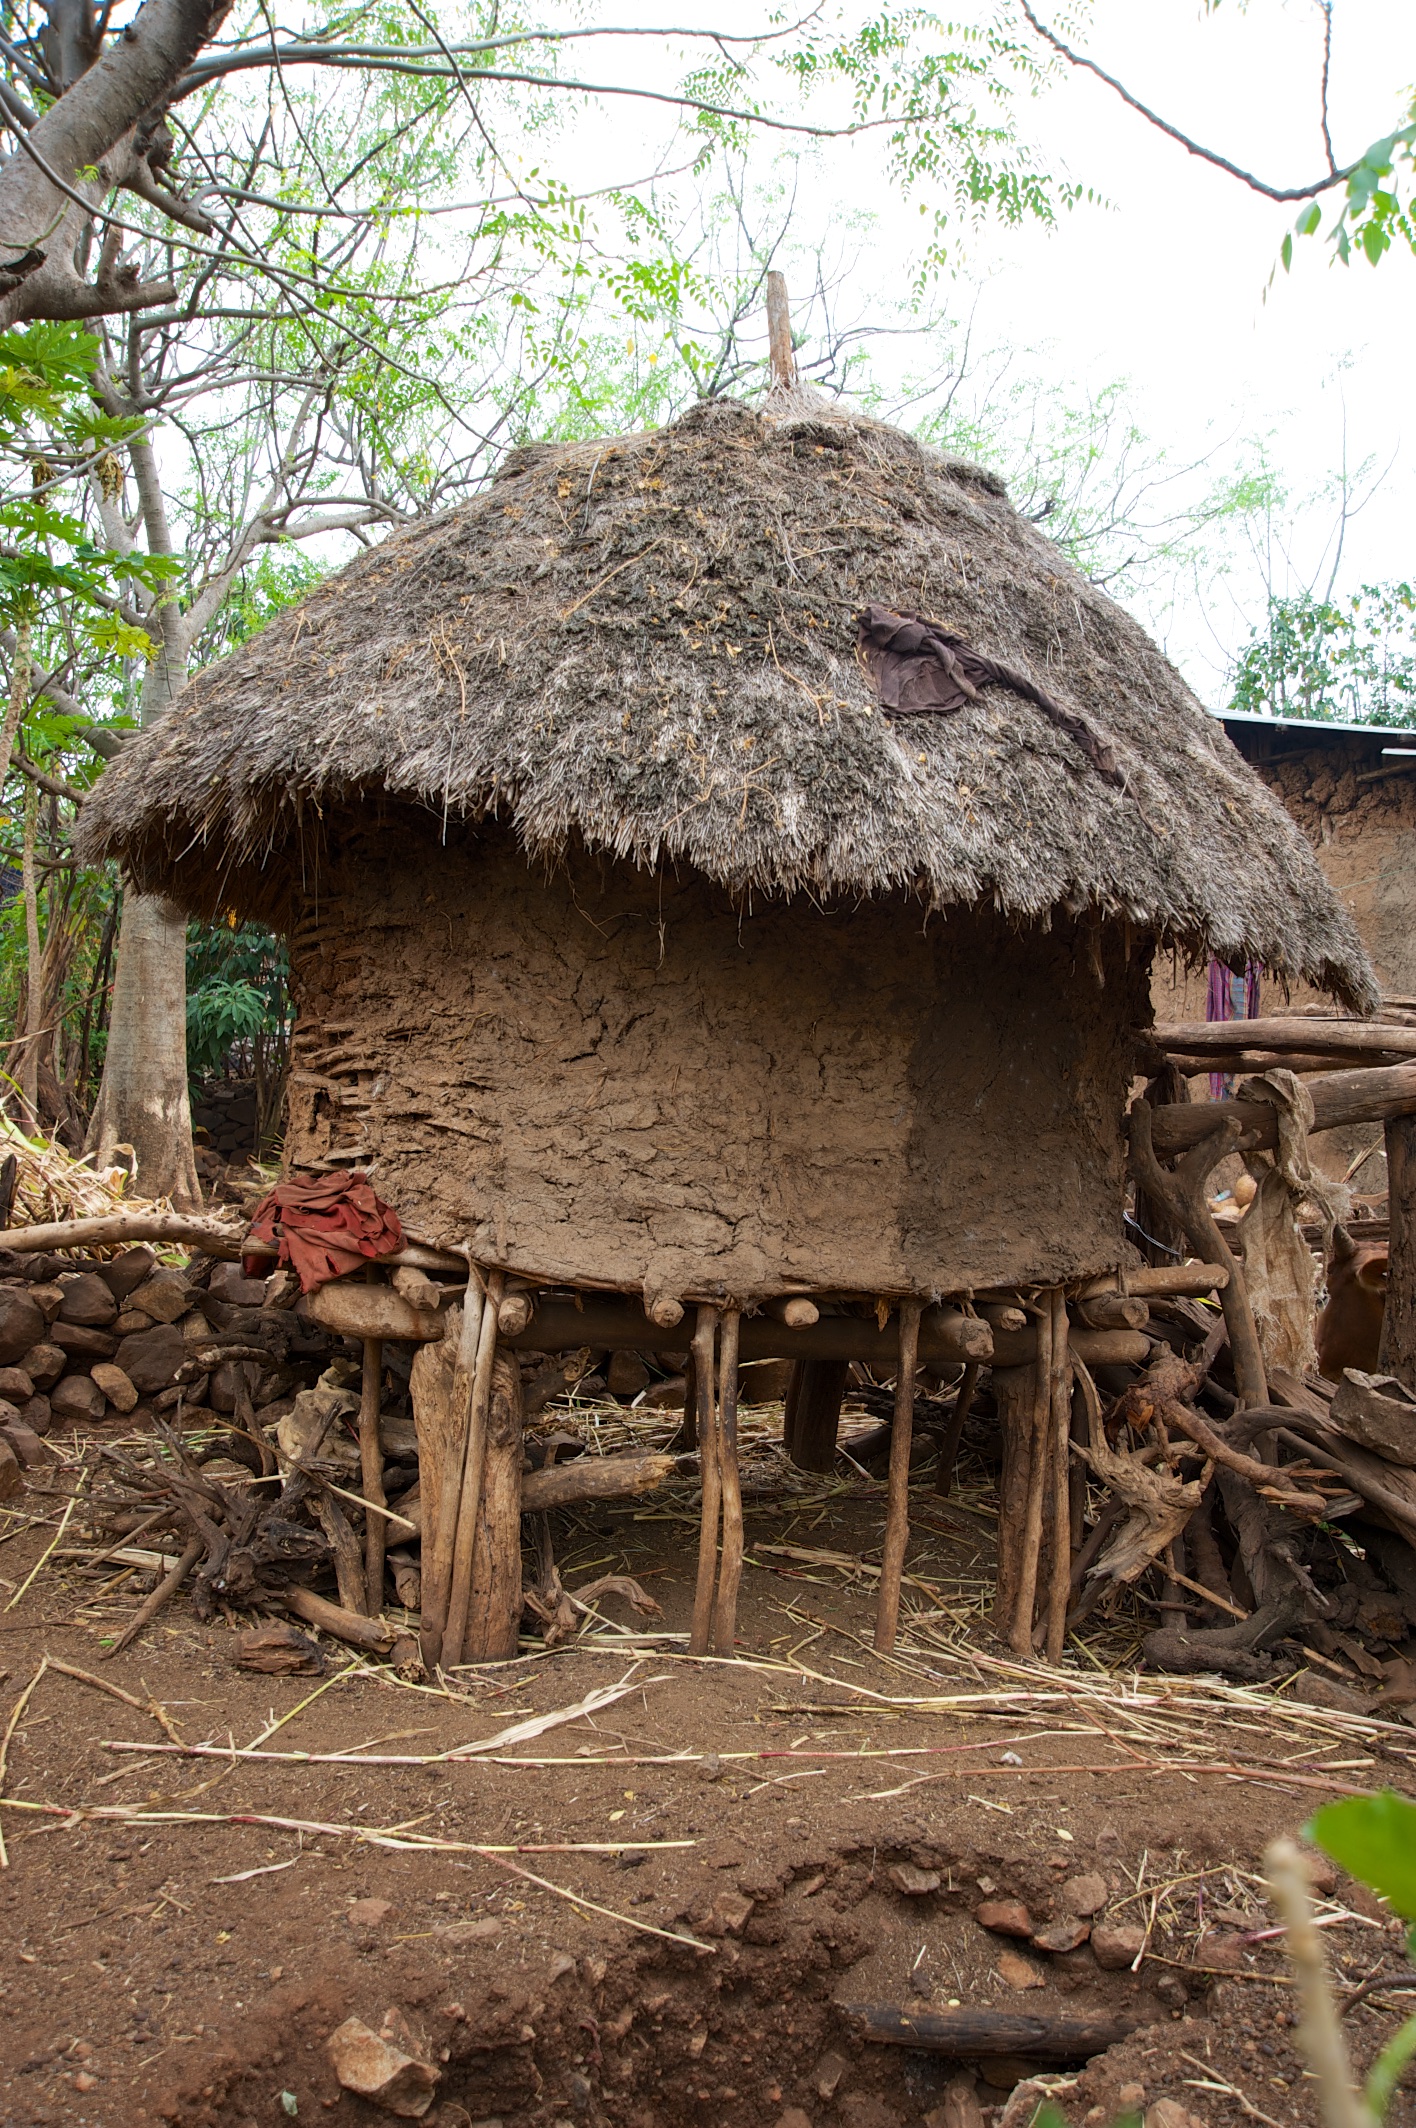  Hut, Konso people village 